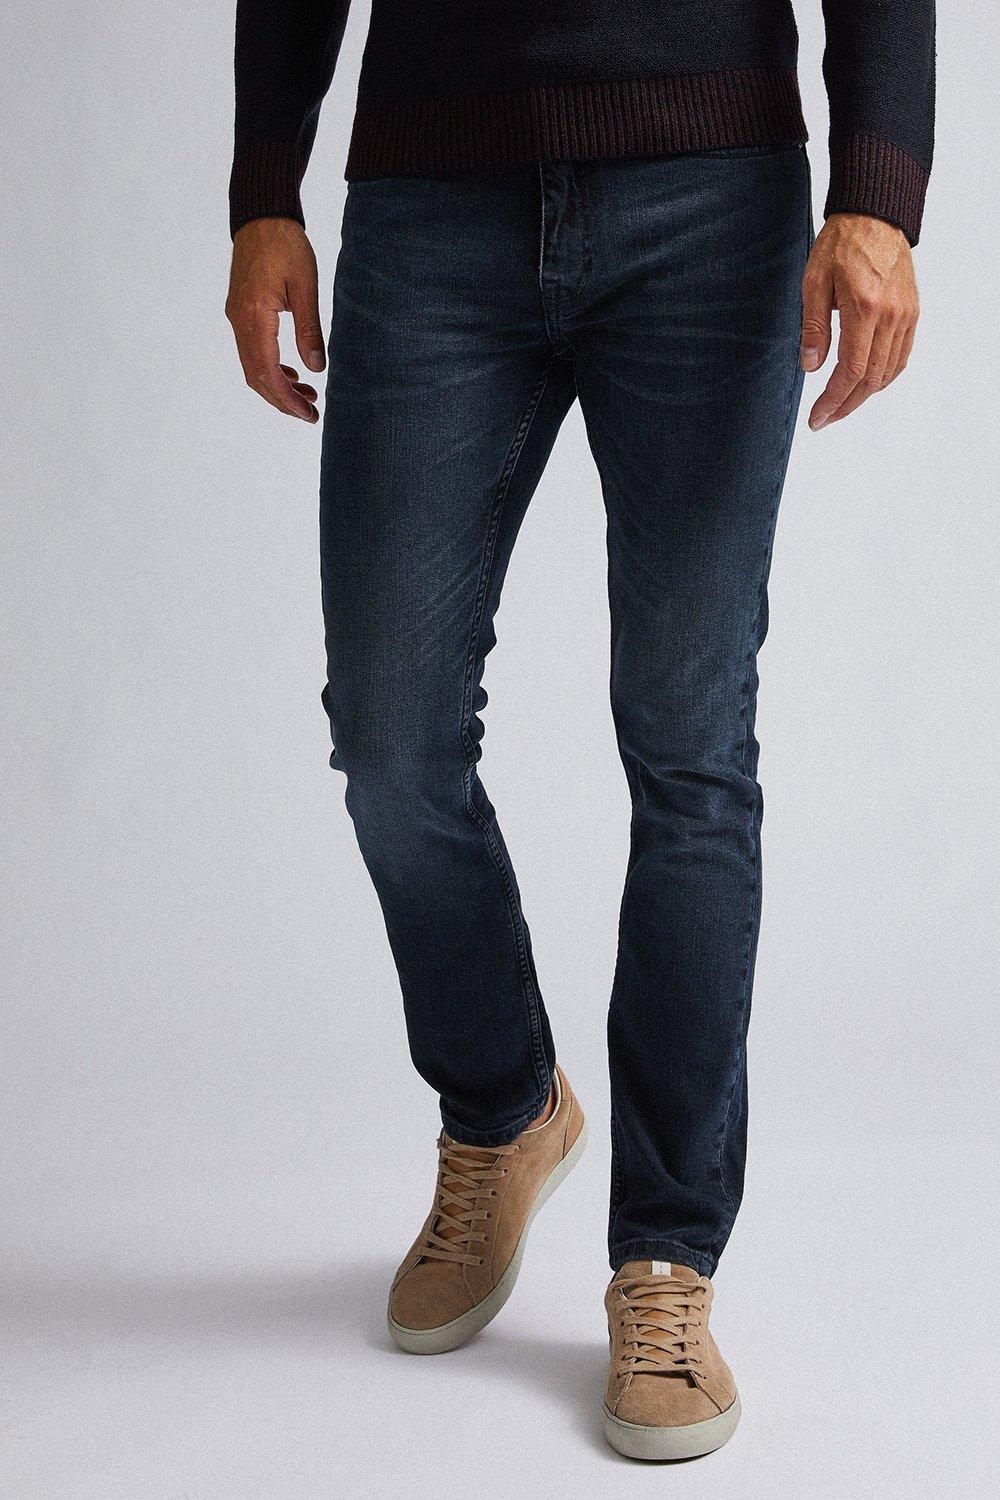 Jeans | Blue Overdye Skinny Fit Jeans | Burton